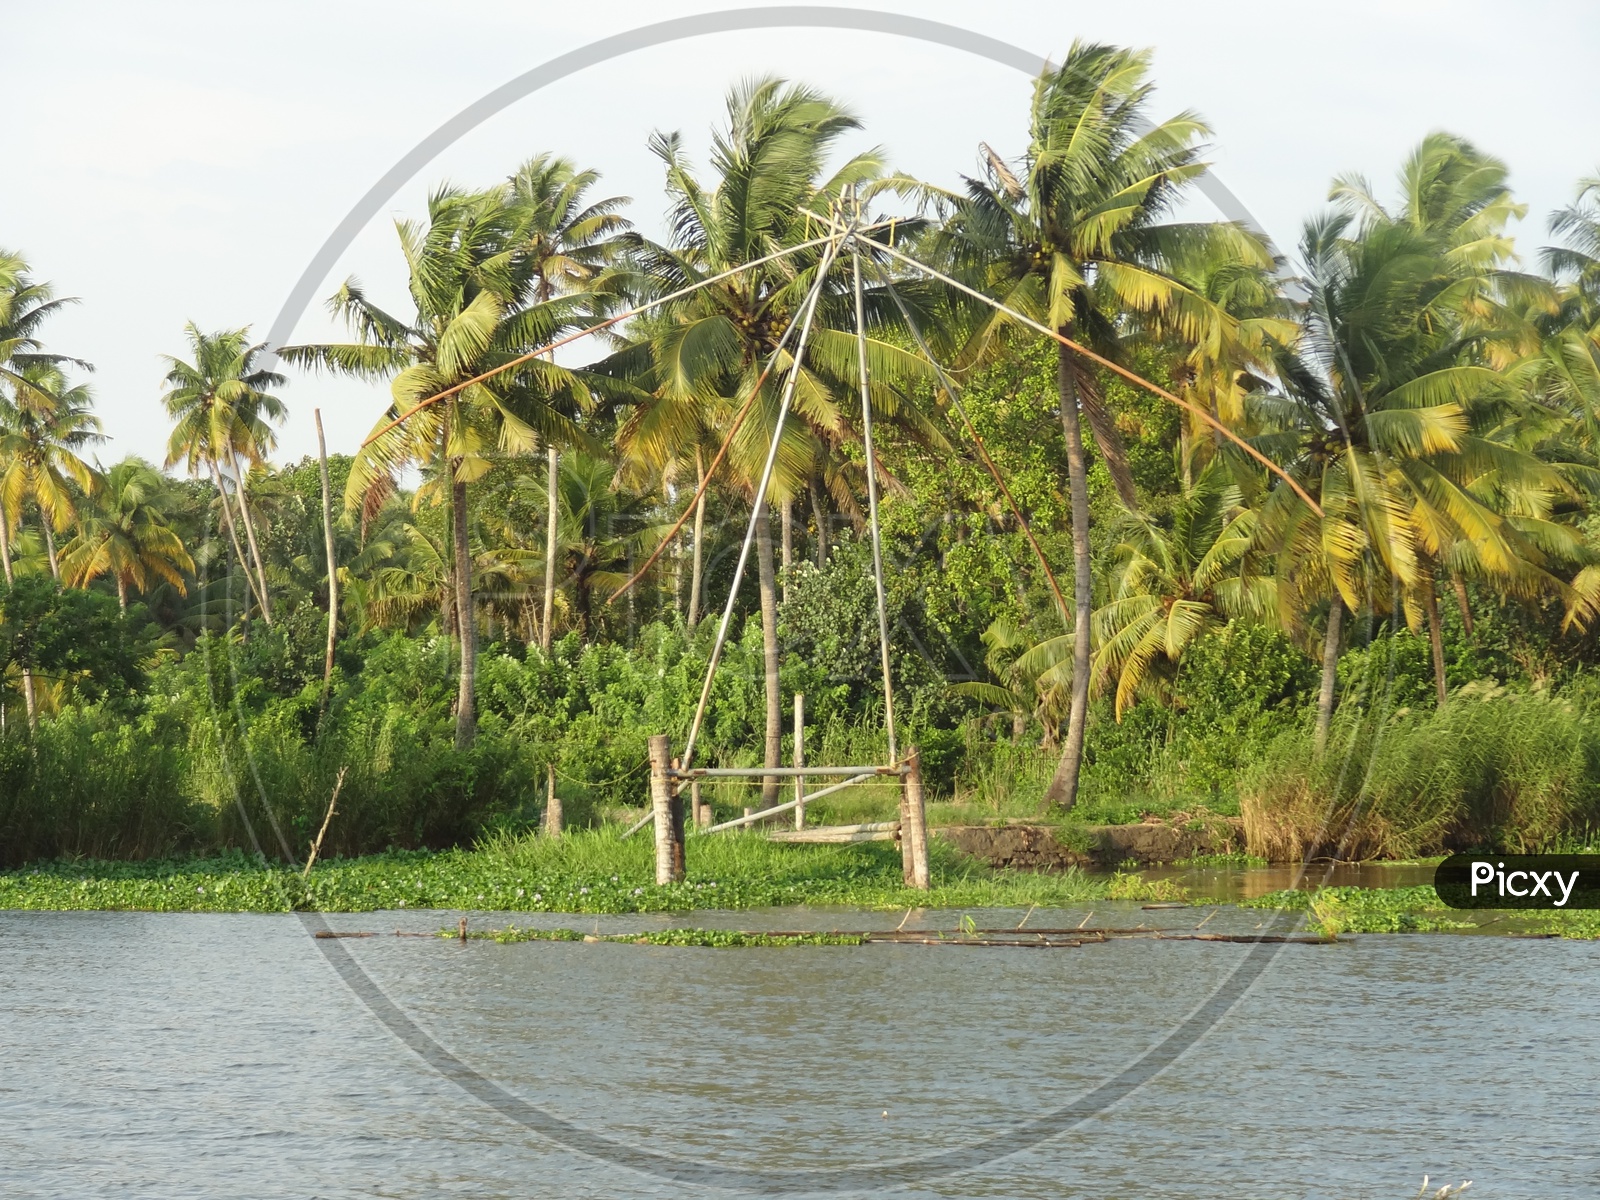 Coconut trees alongside the Kerala backwaters